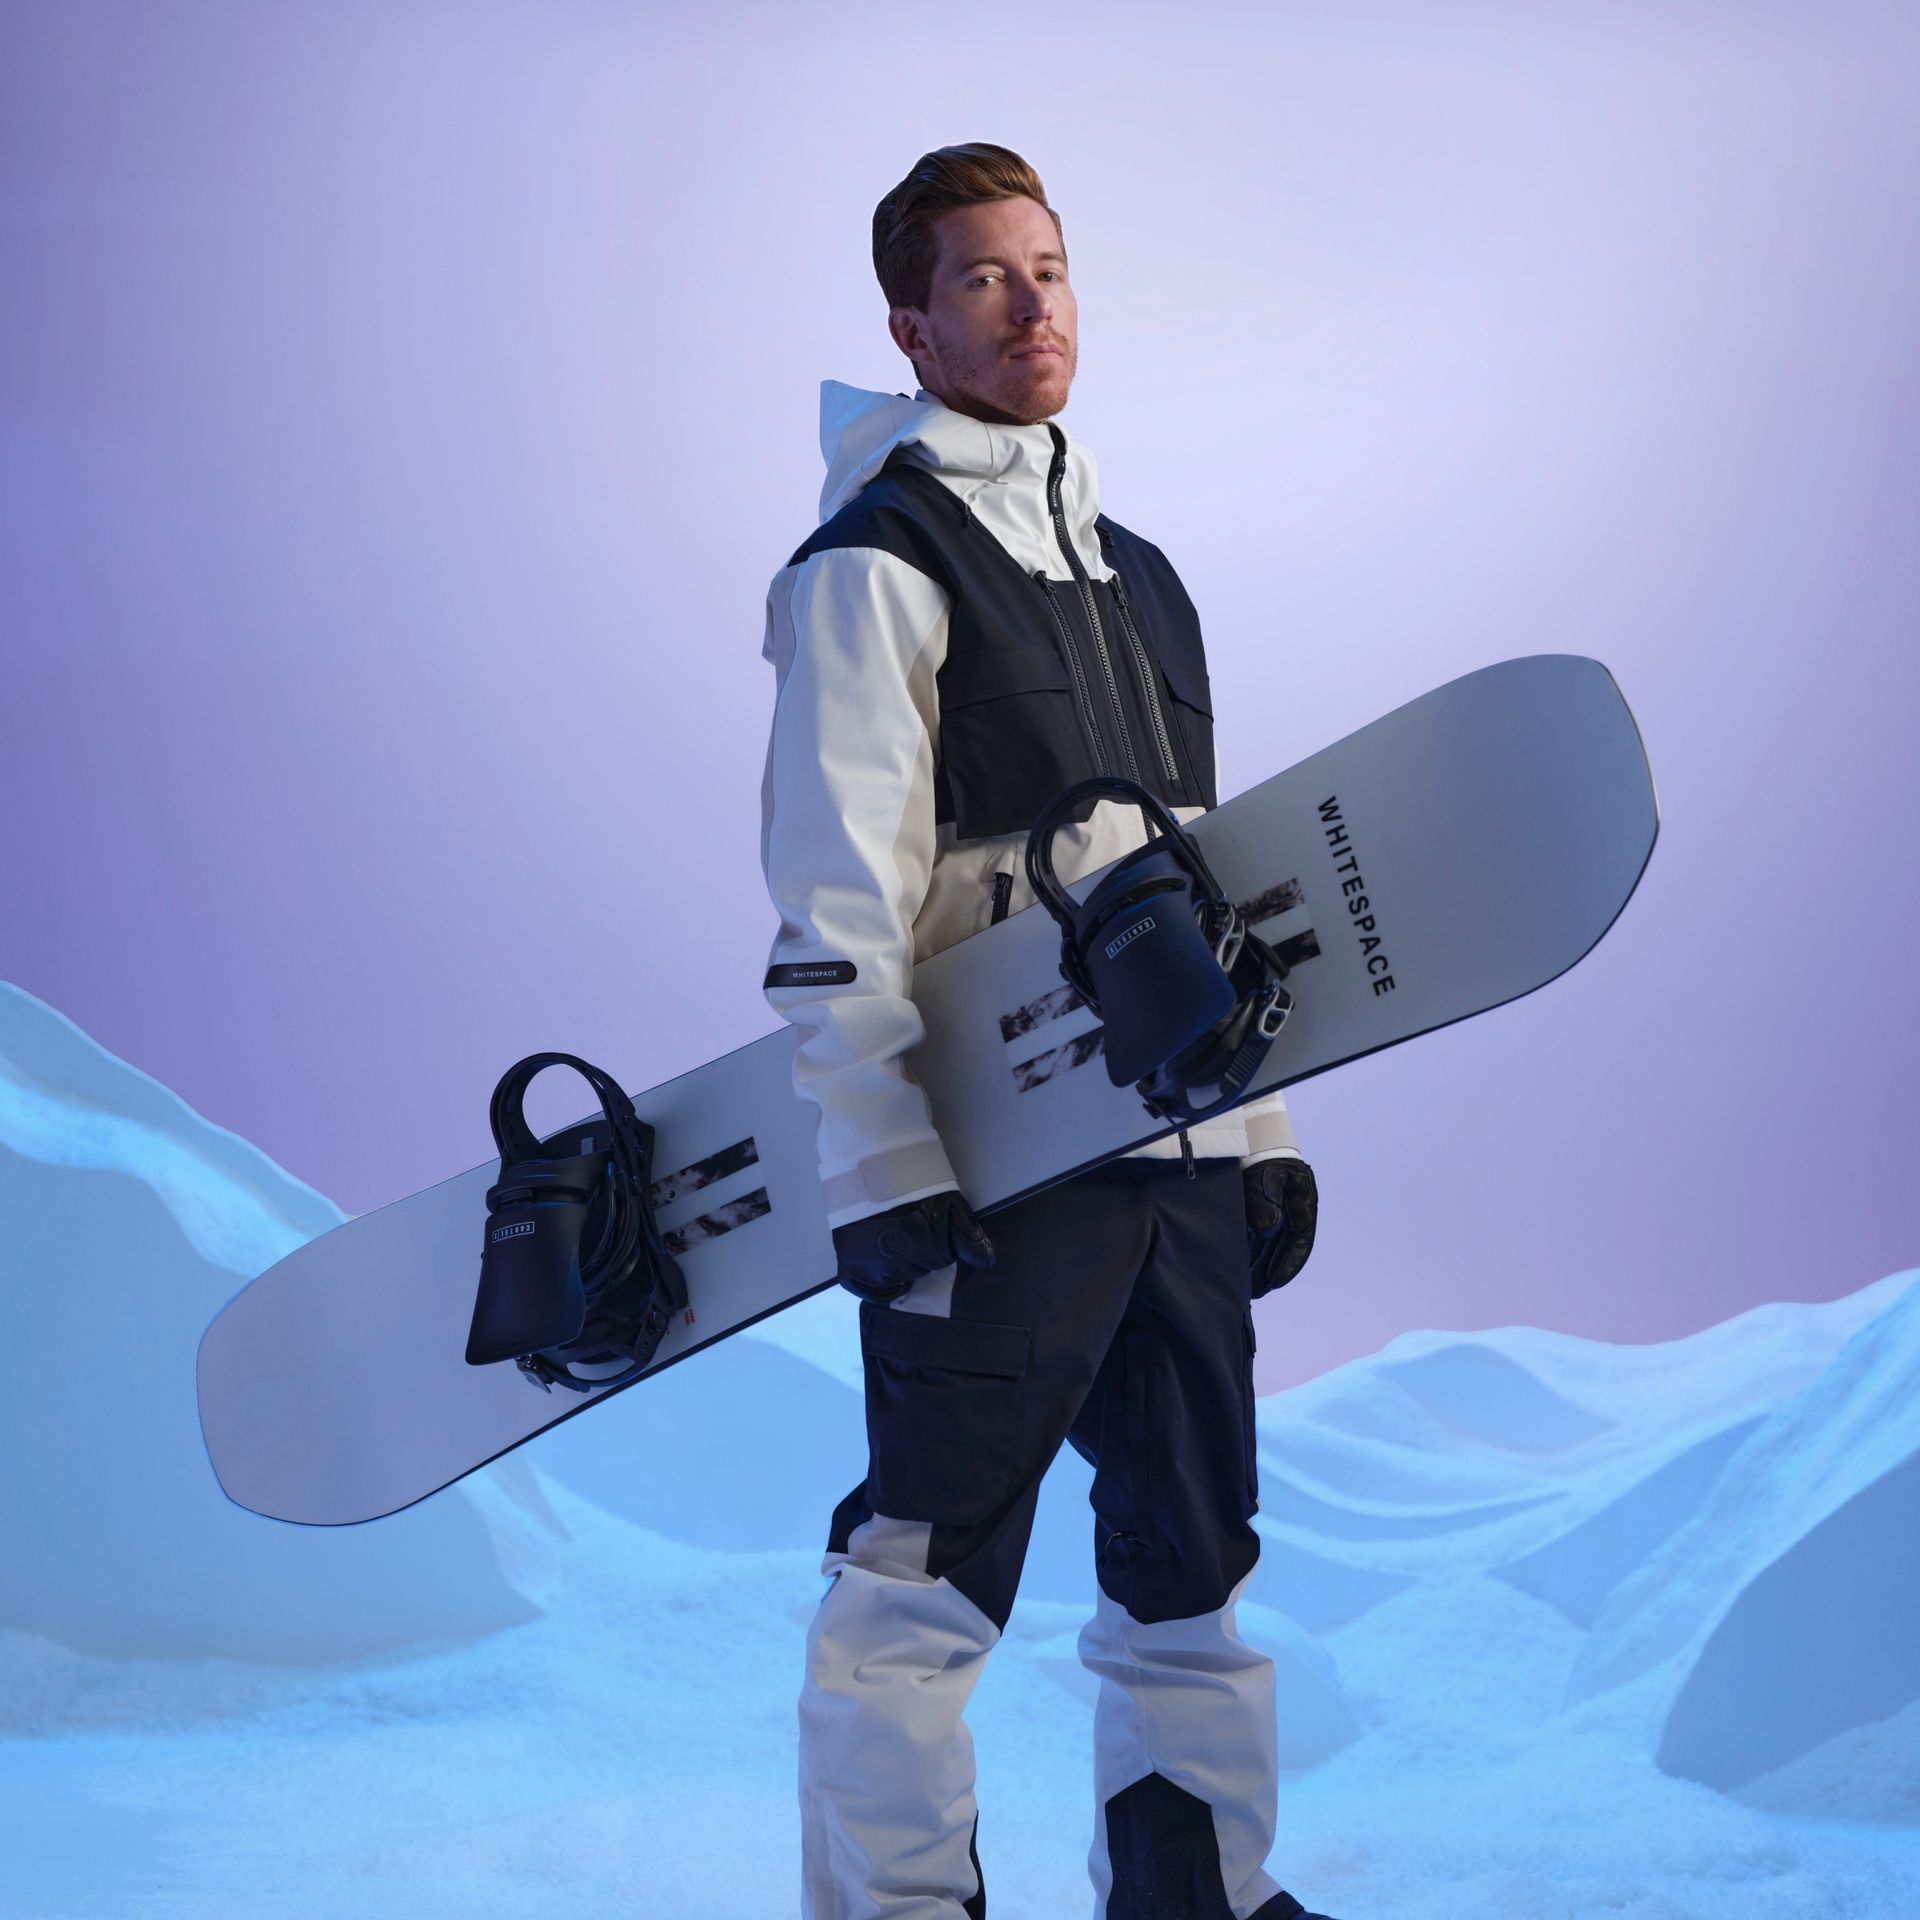 Shaun White - Professional Snowboarder - ABC of Snowboarding